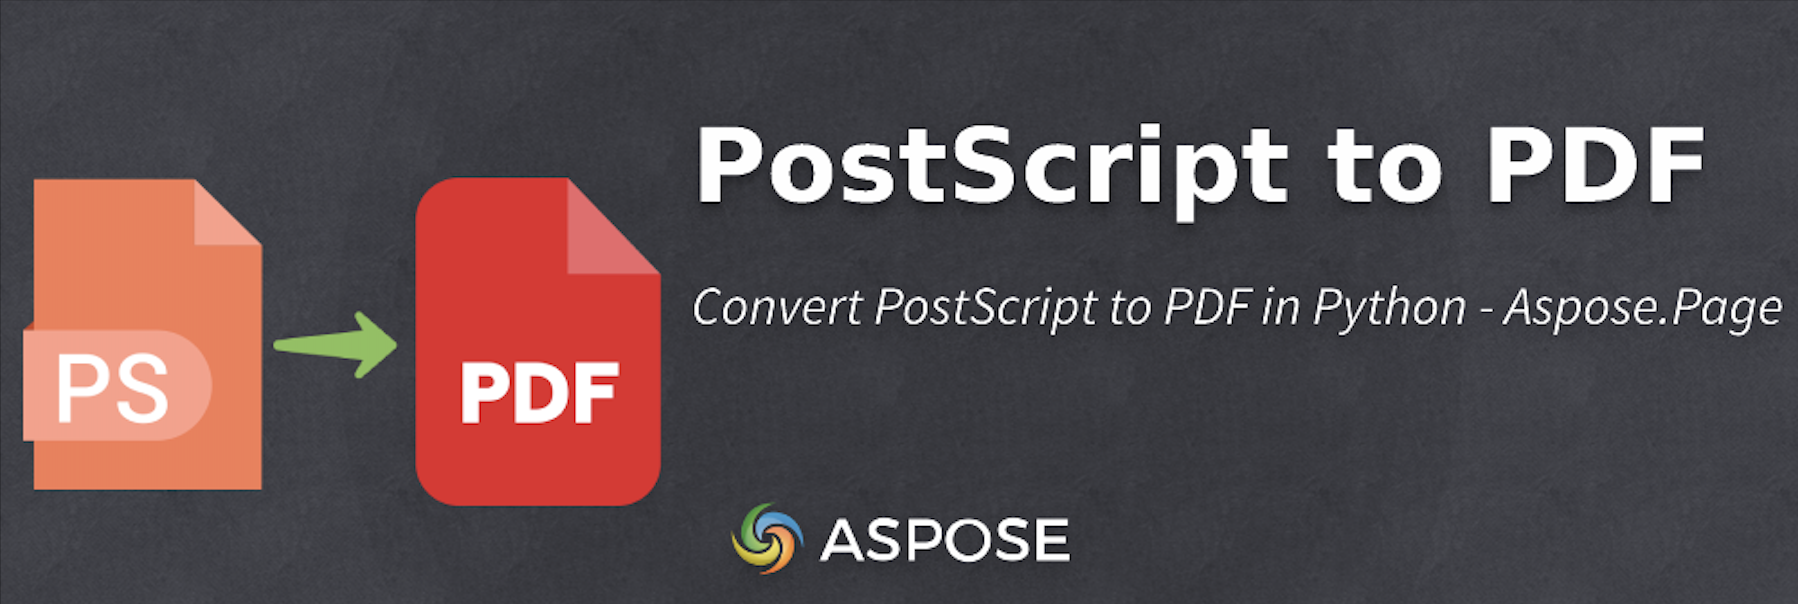 Convert PostScript to PDF in Python 